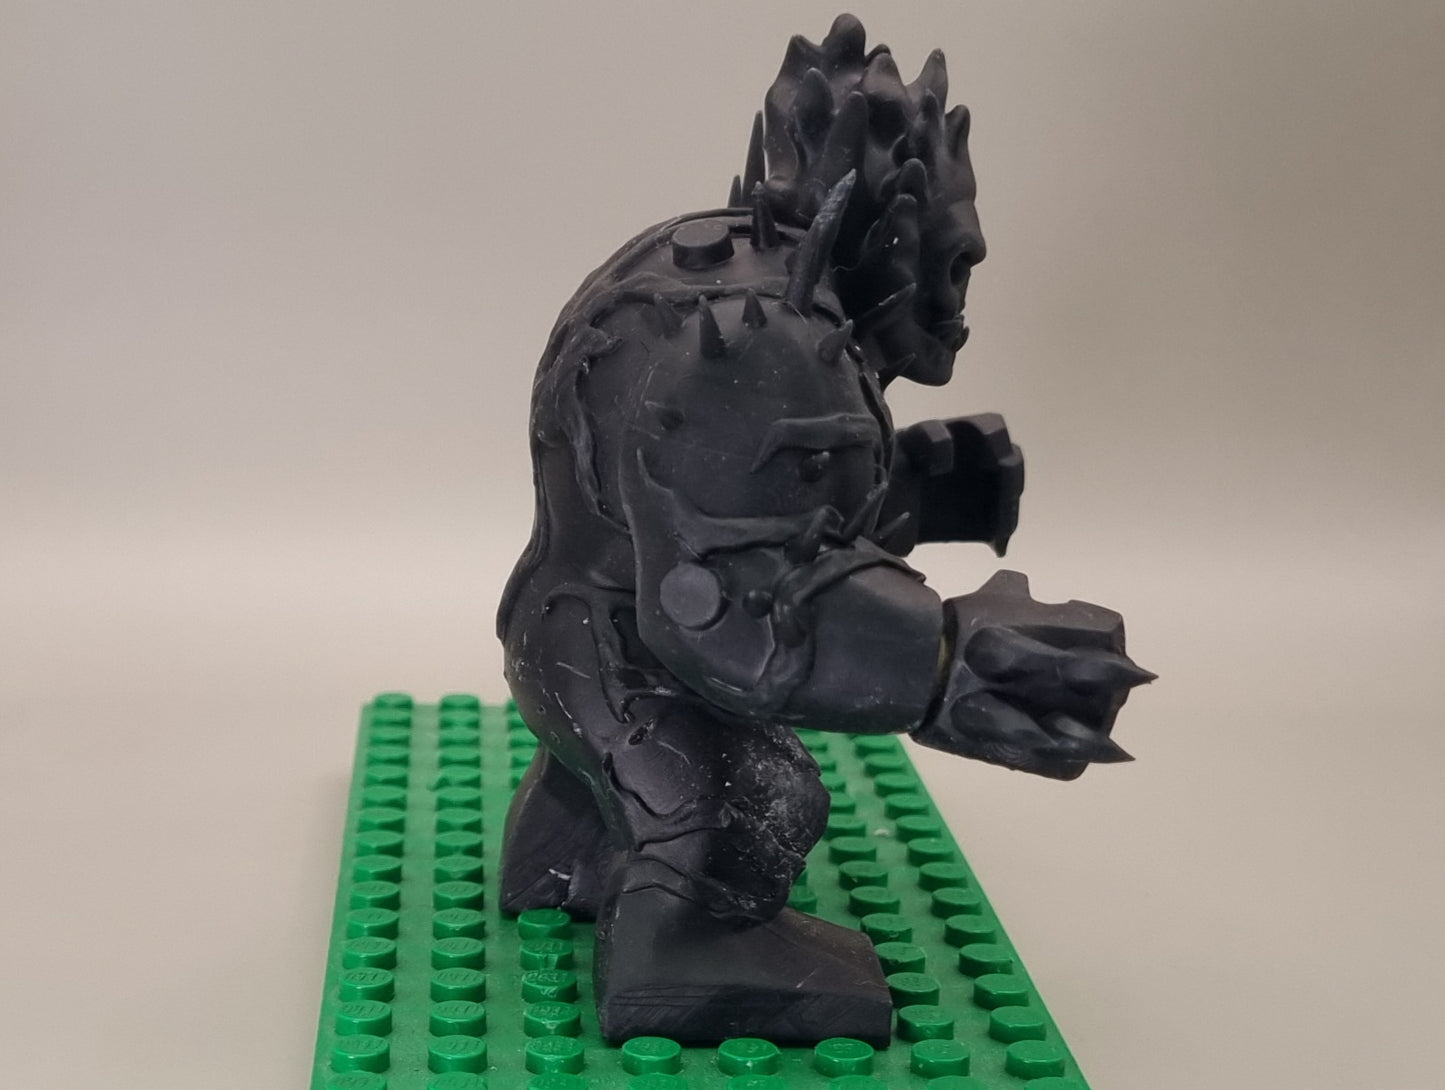 Building toy custom 3D printed super hero flaming head bigfig!